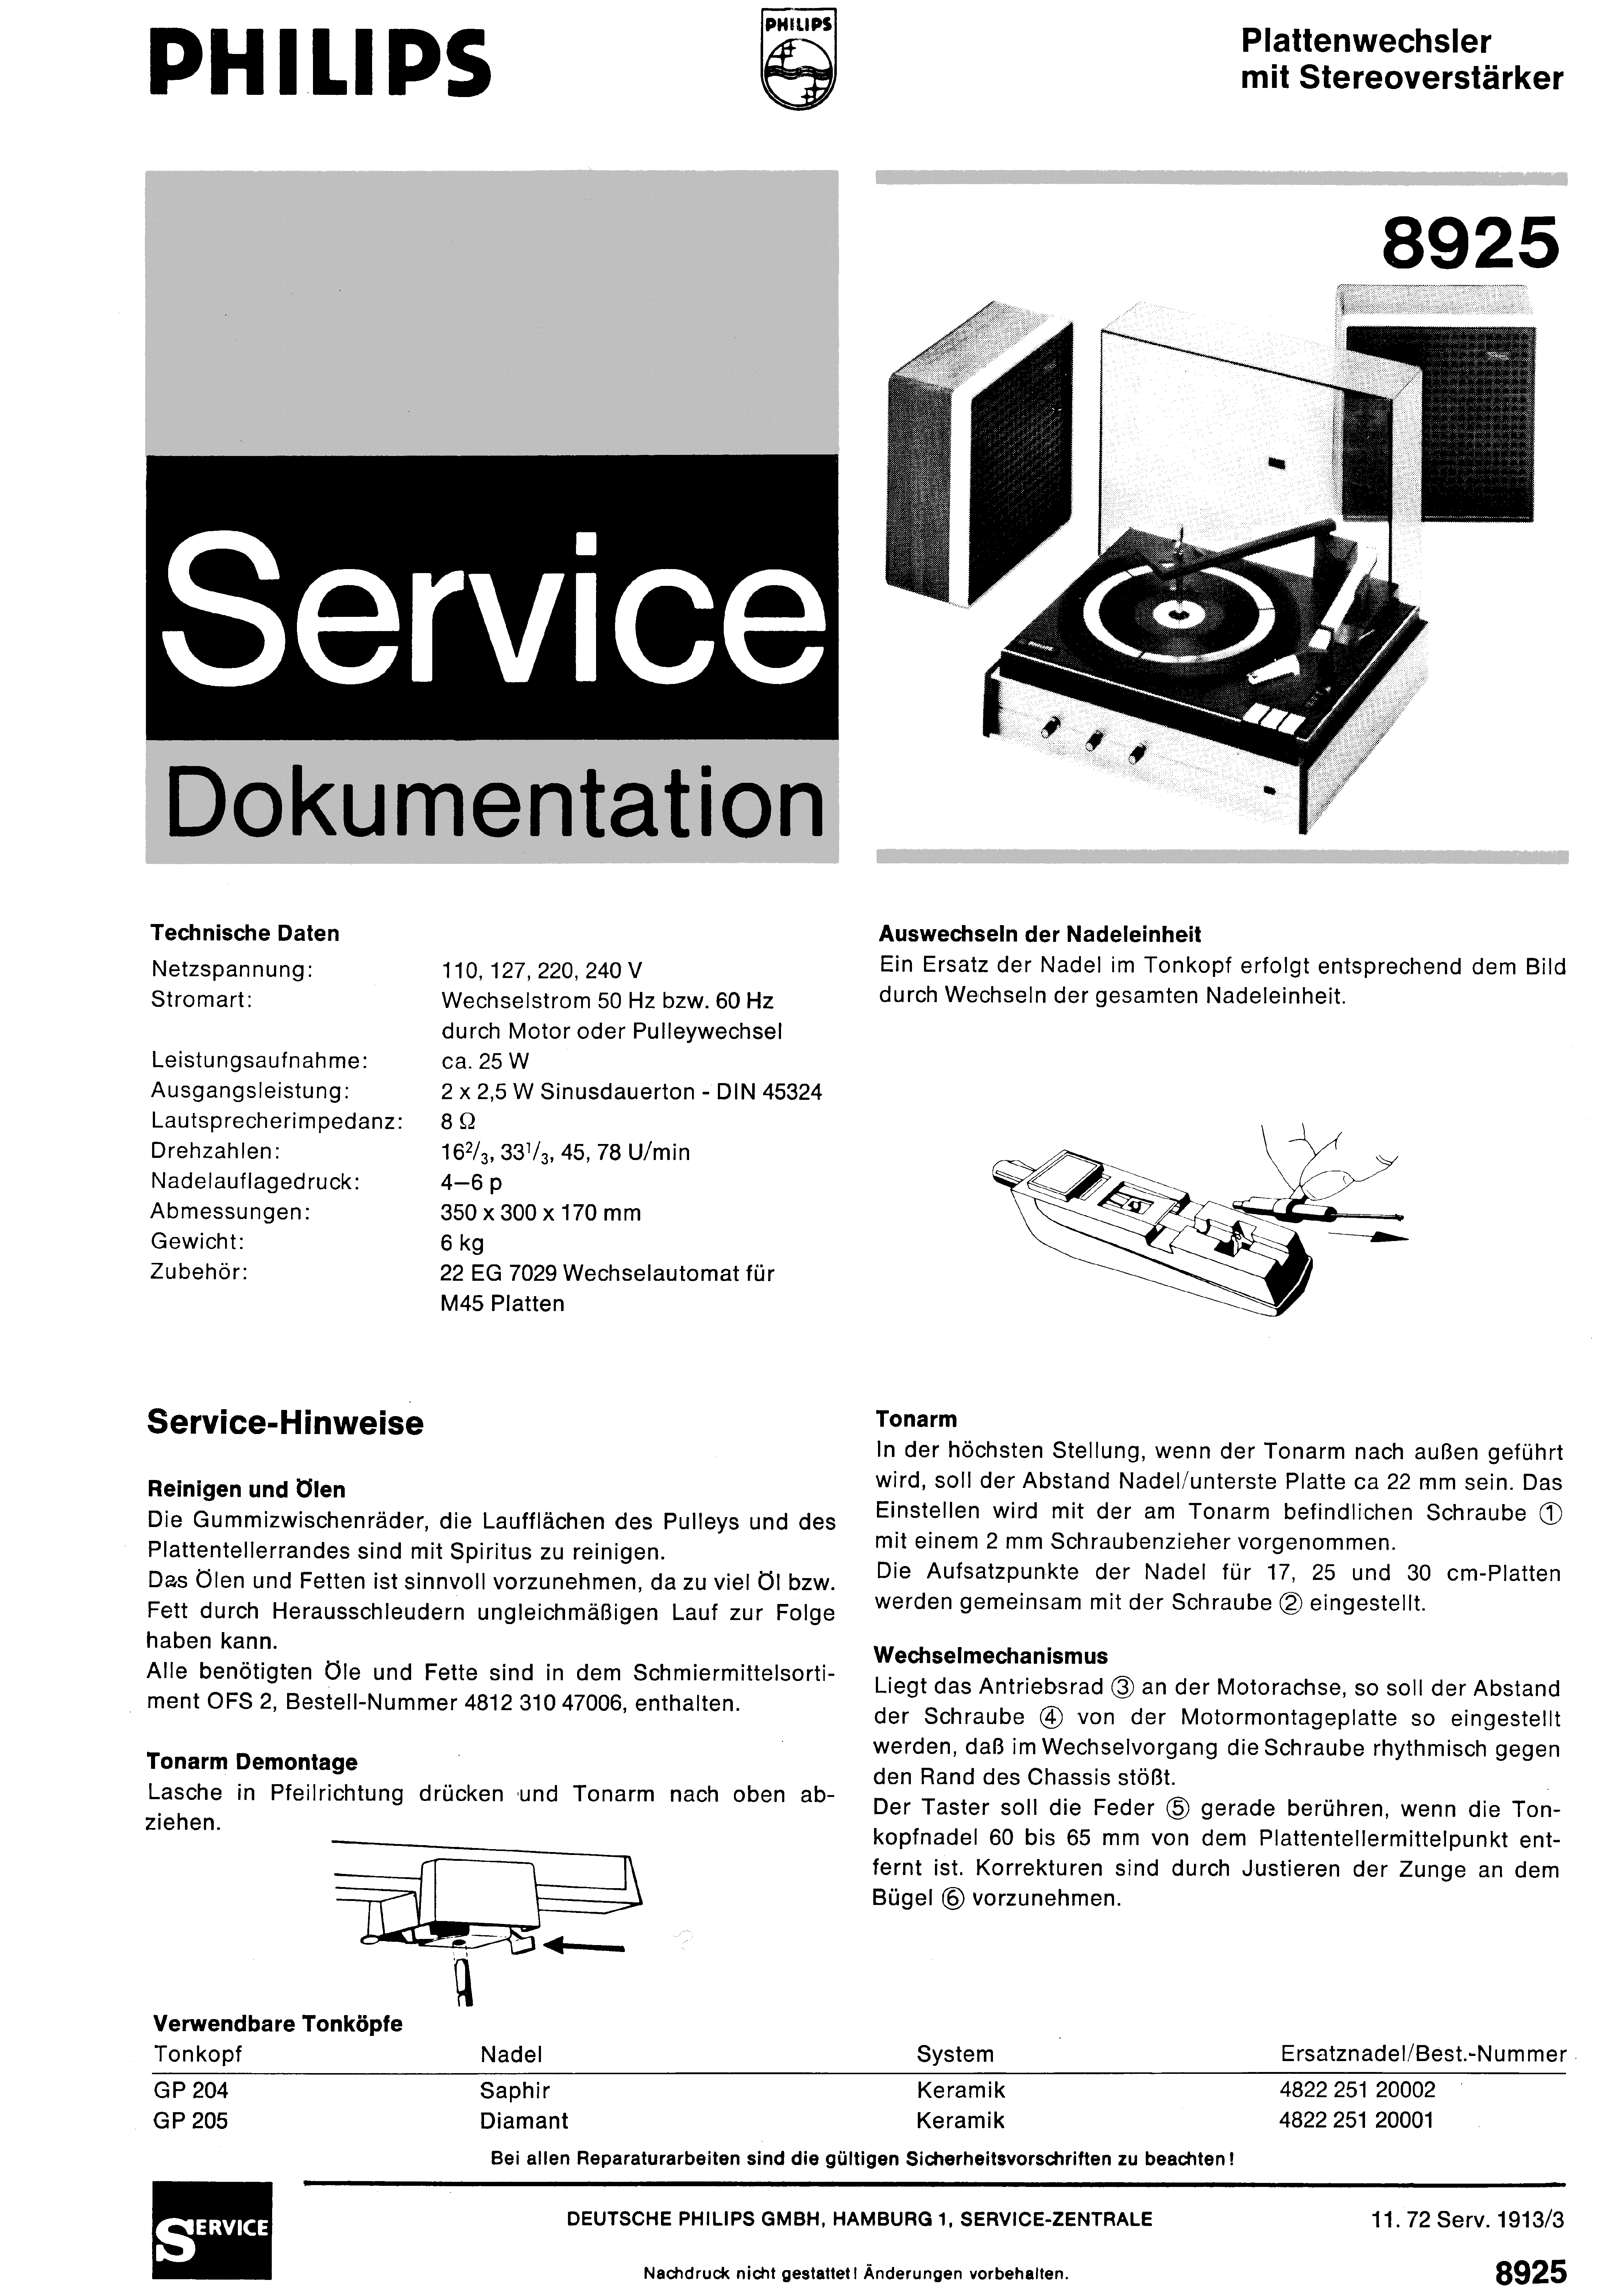 PHILIPS PLATTENWECHSLER MIT STEREOVERSTAERKER 8925 SM service manual (1st page)